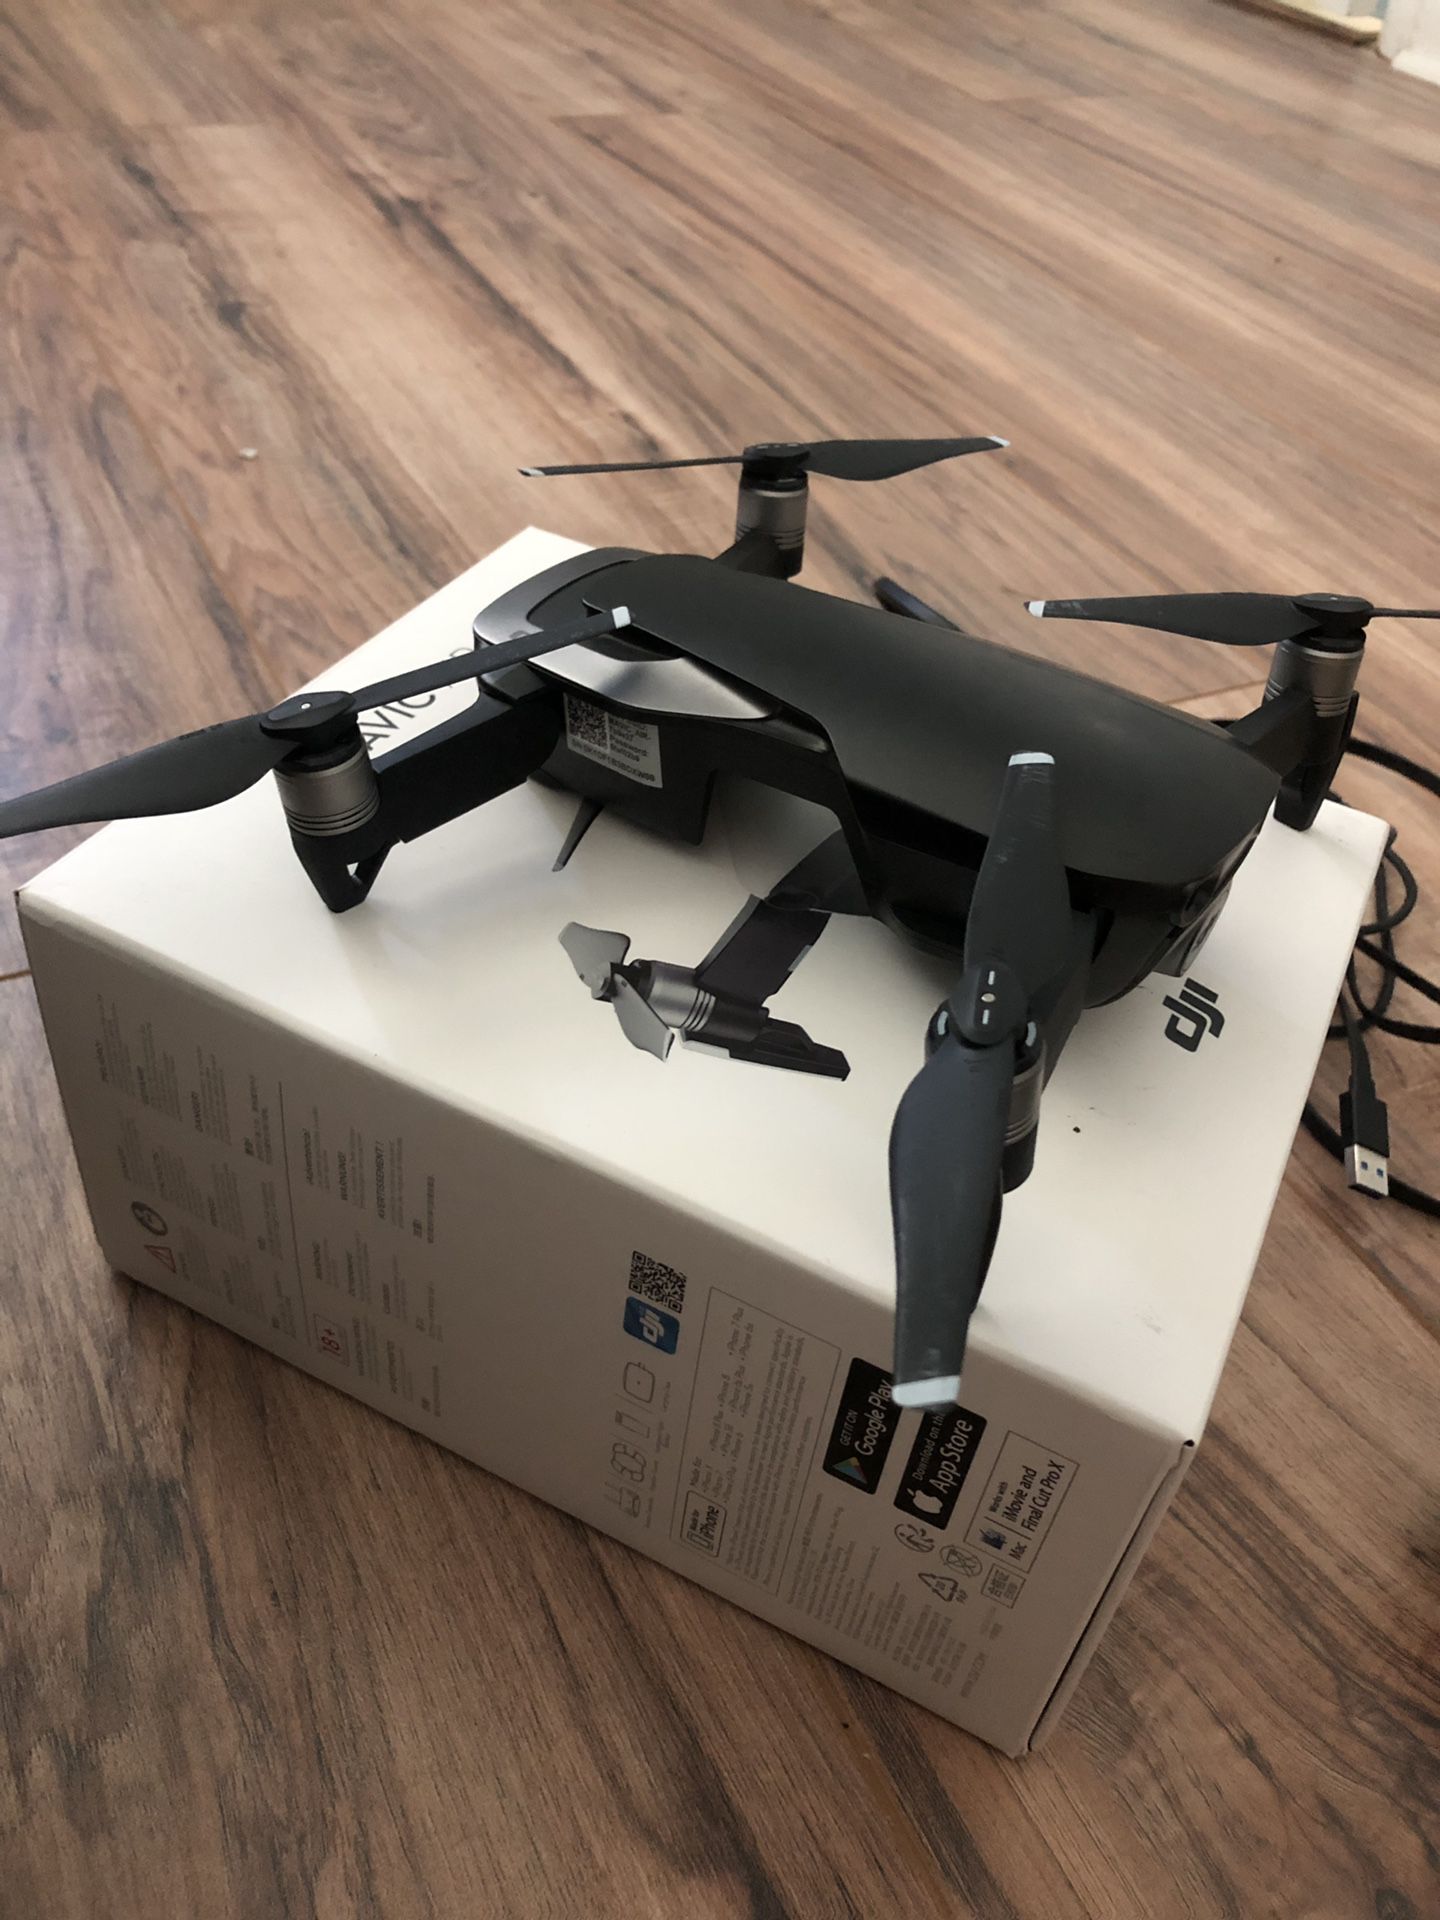 Dji mavic Air drone